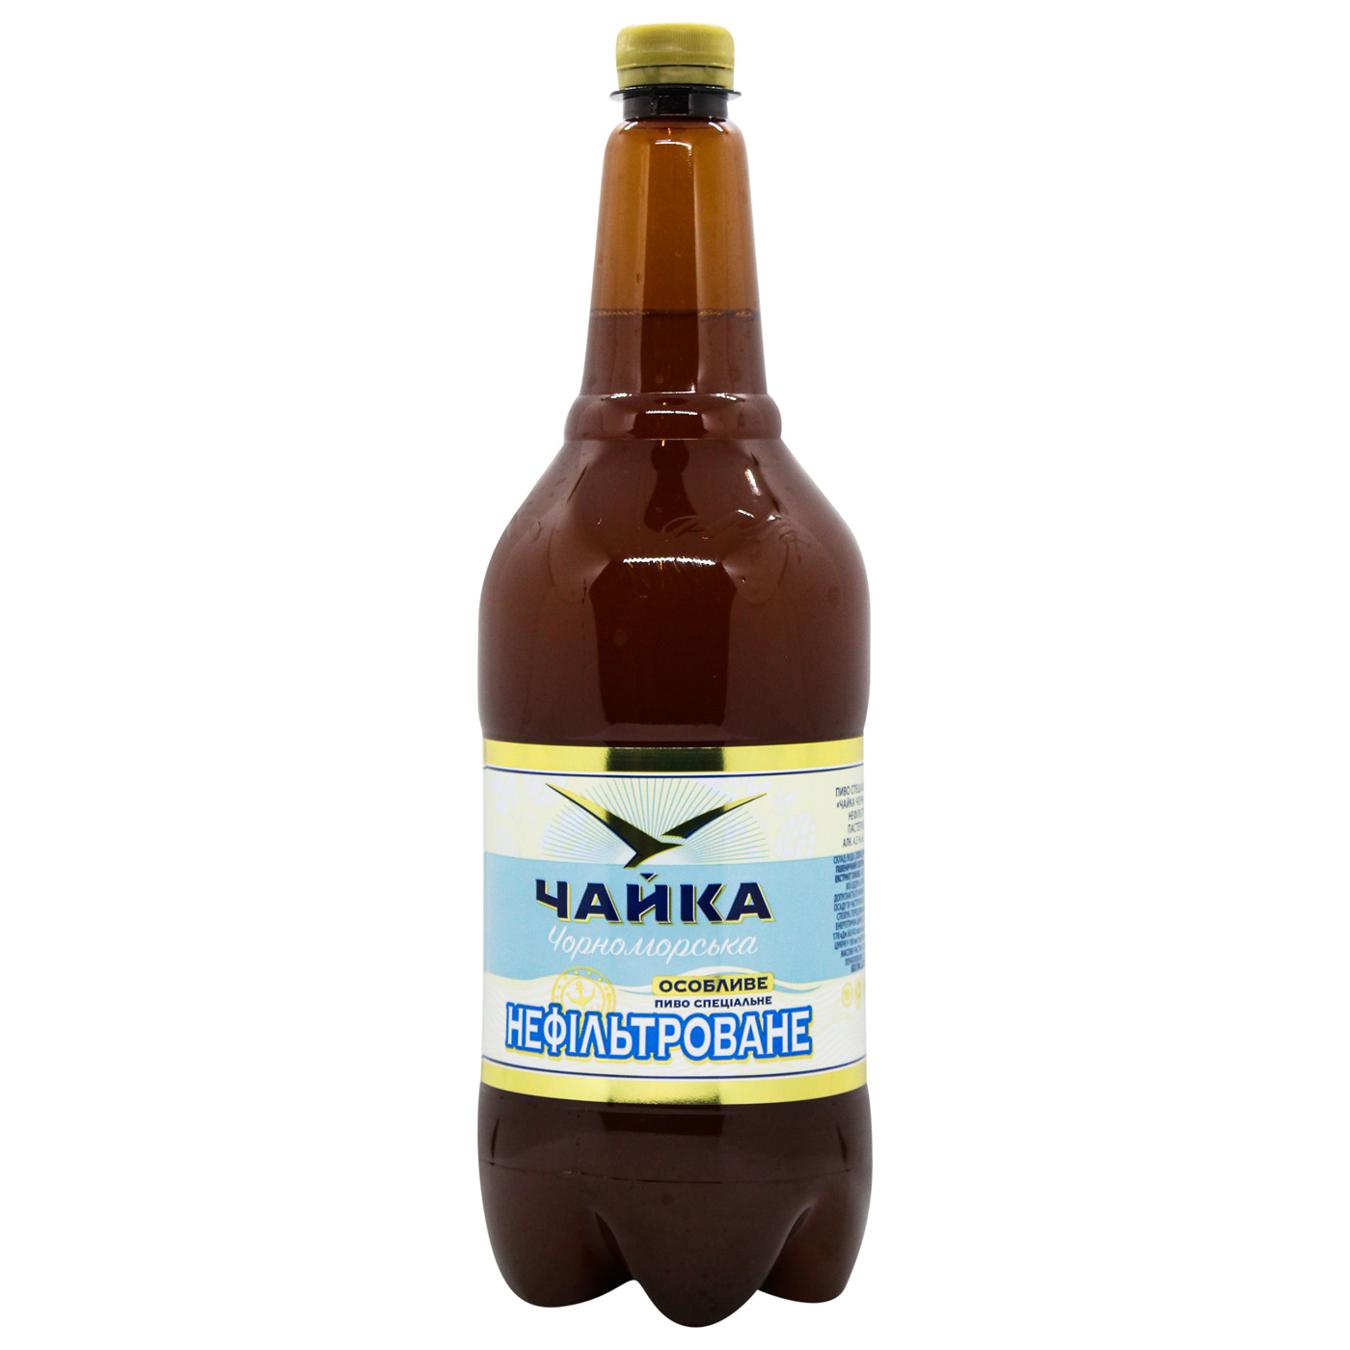 Light unfiltered beer Seagull Black Sea 4.8% 1.45l plastic bottle